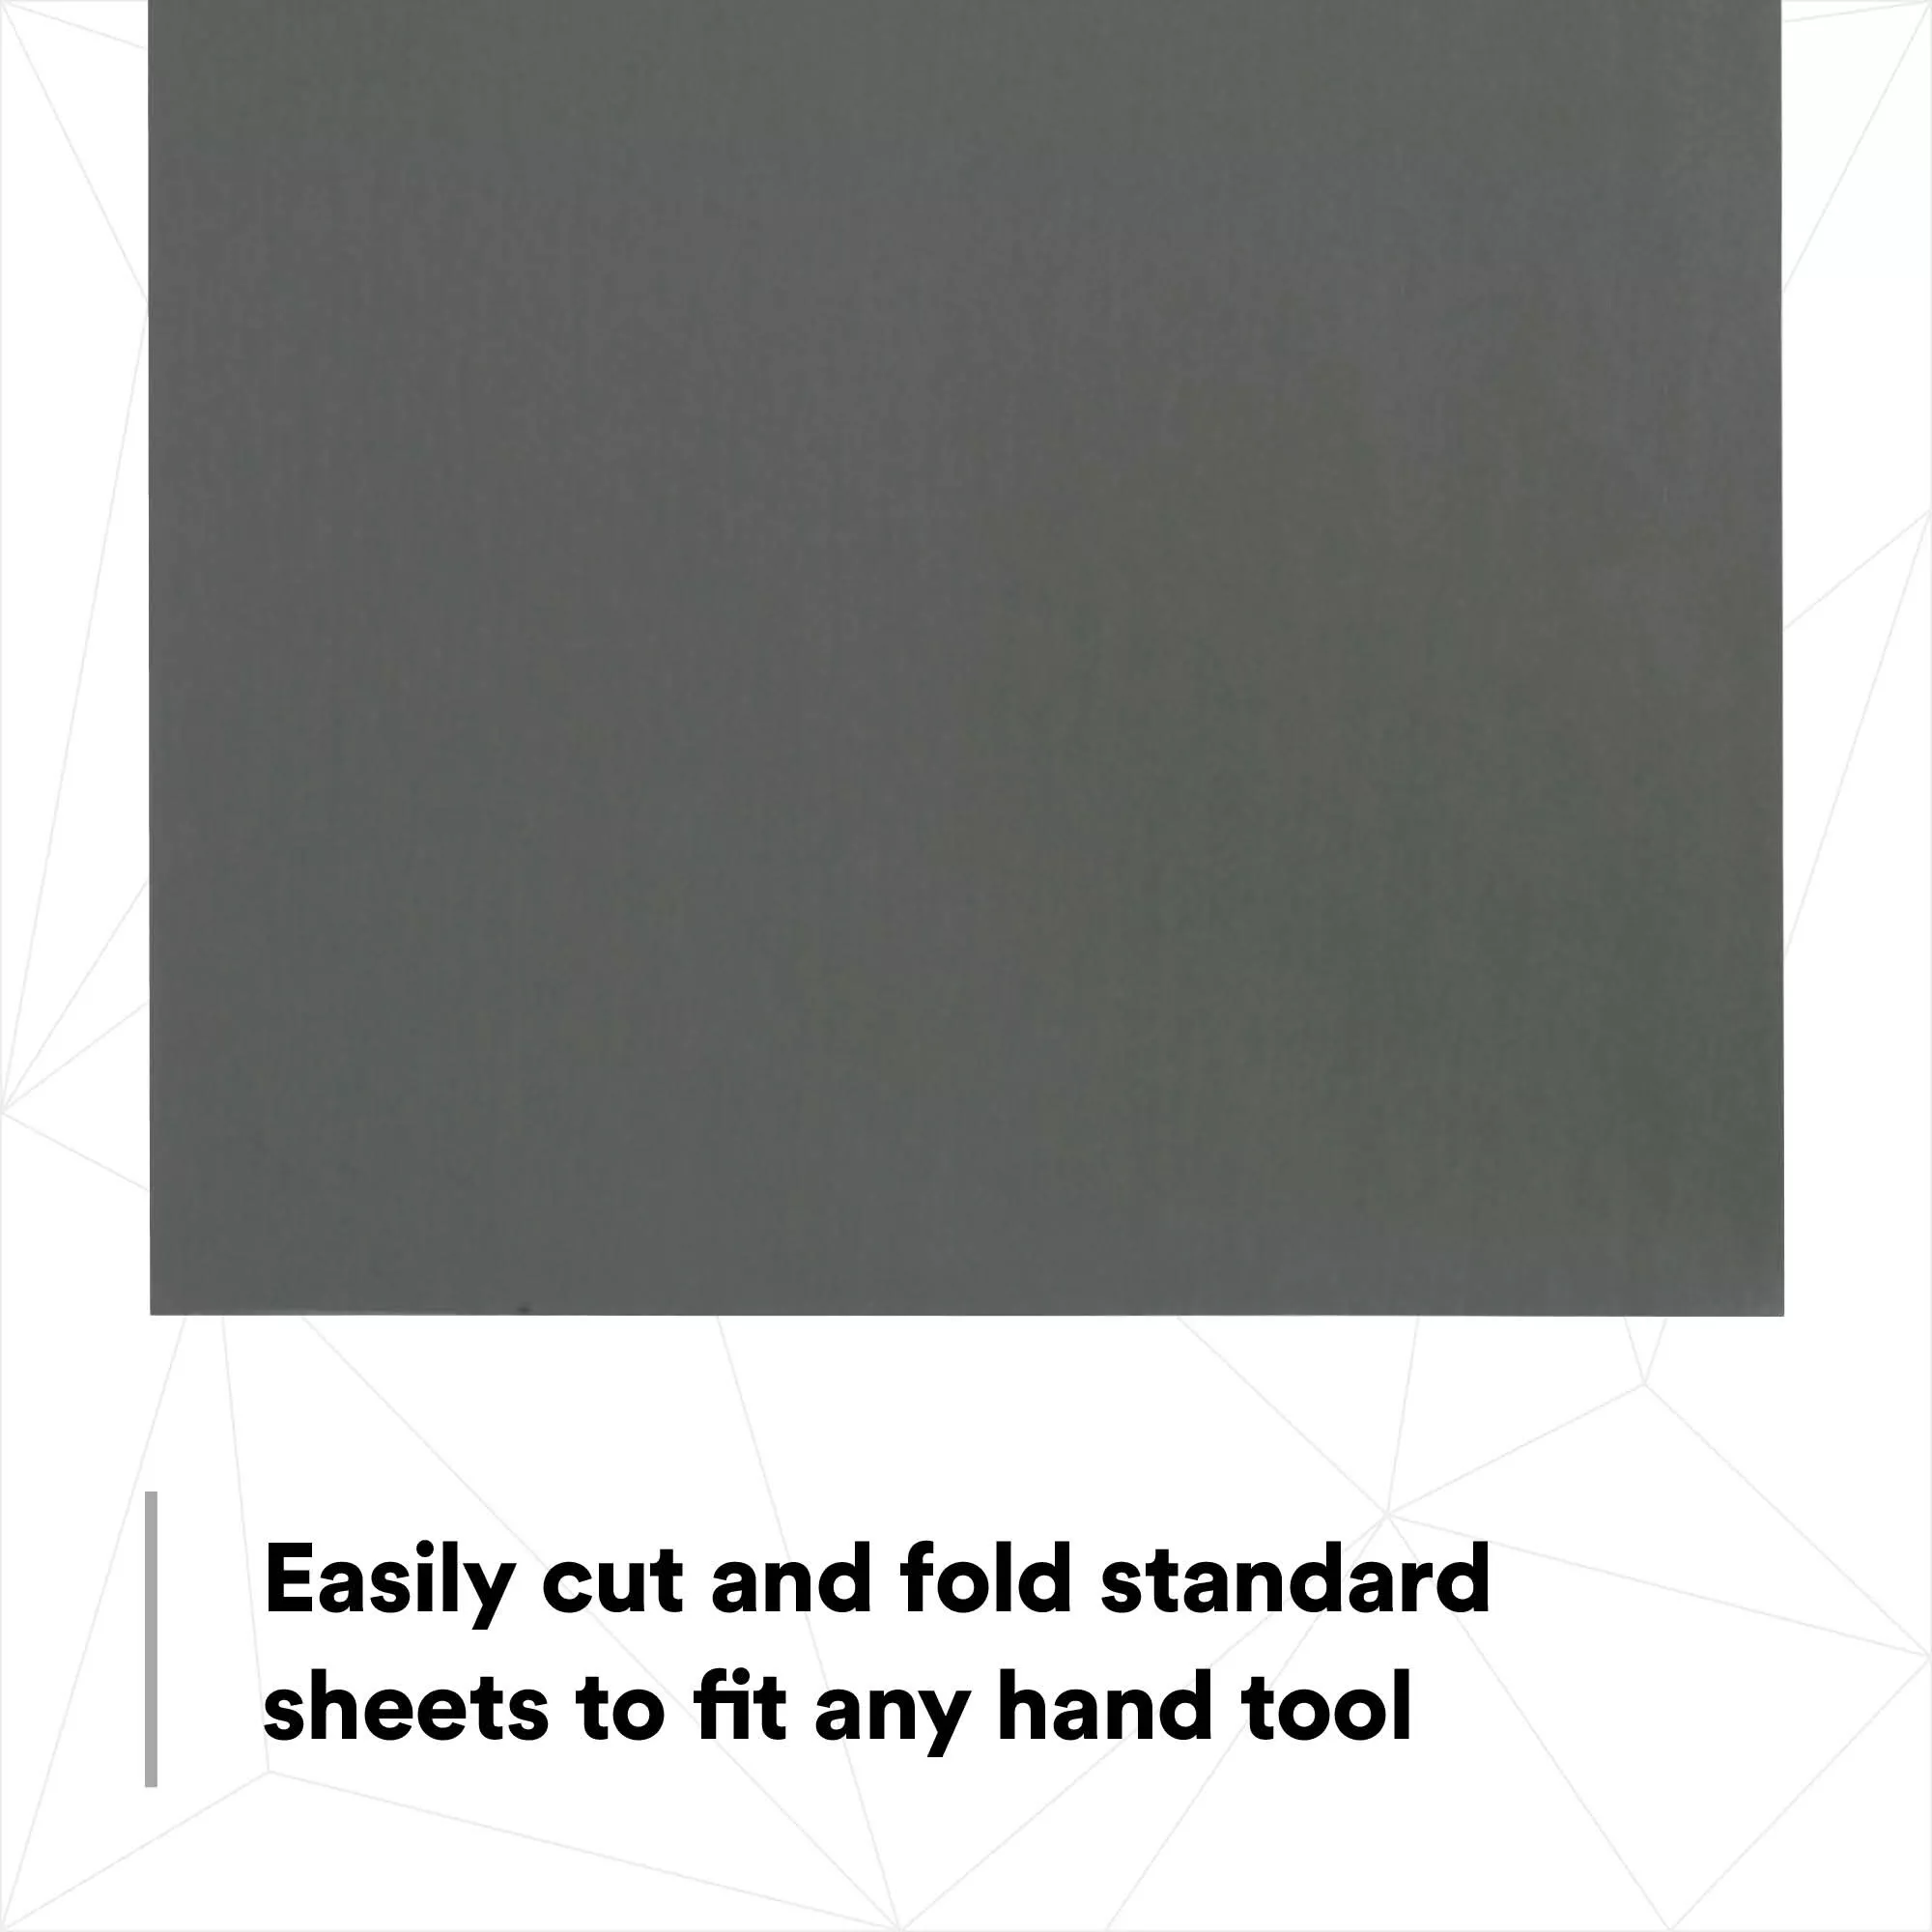 SKU 7000045547 | 3M™ Wetordry™ Abrasive Sheet